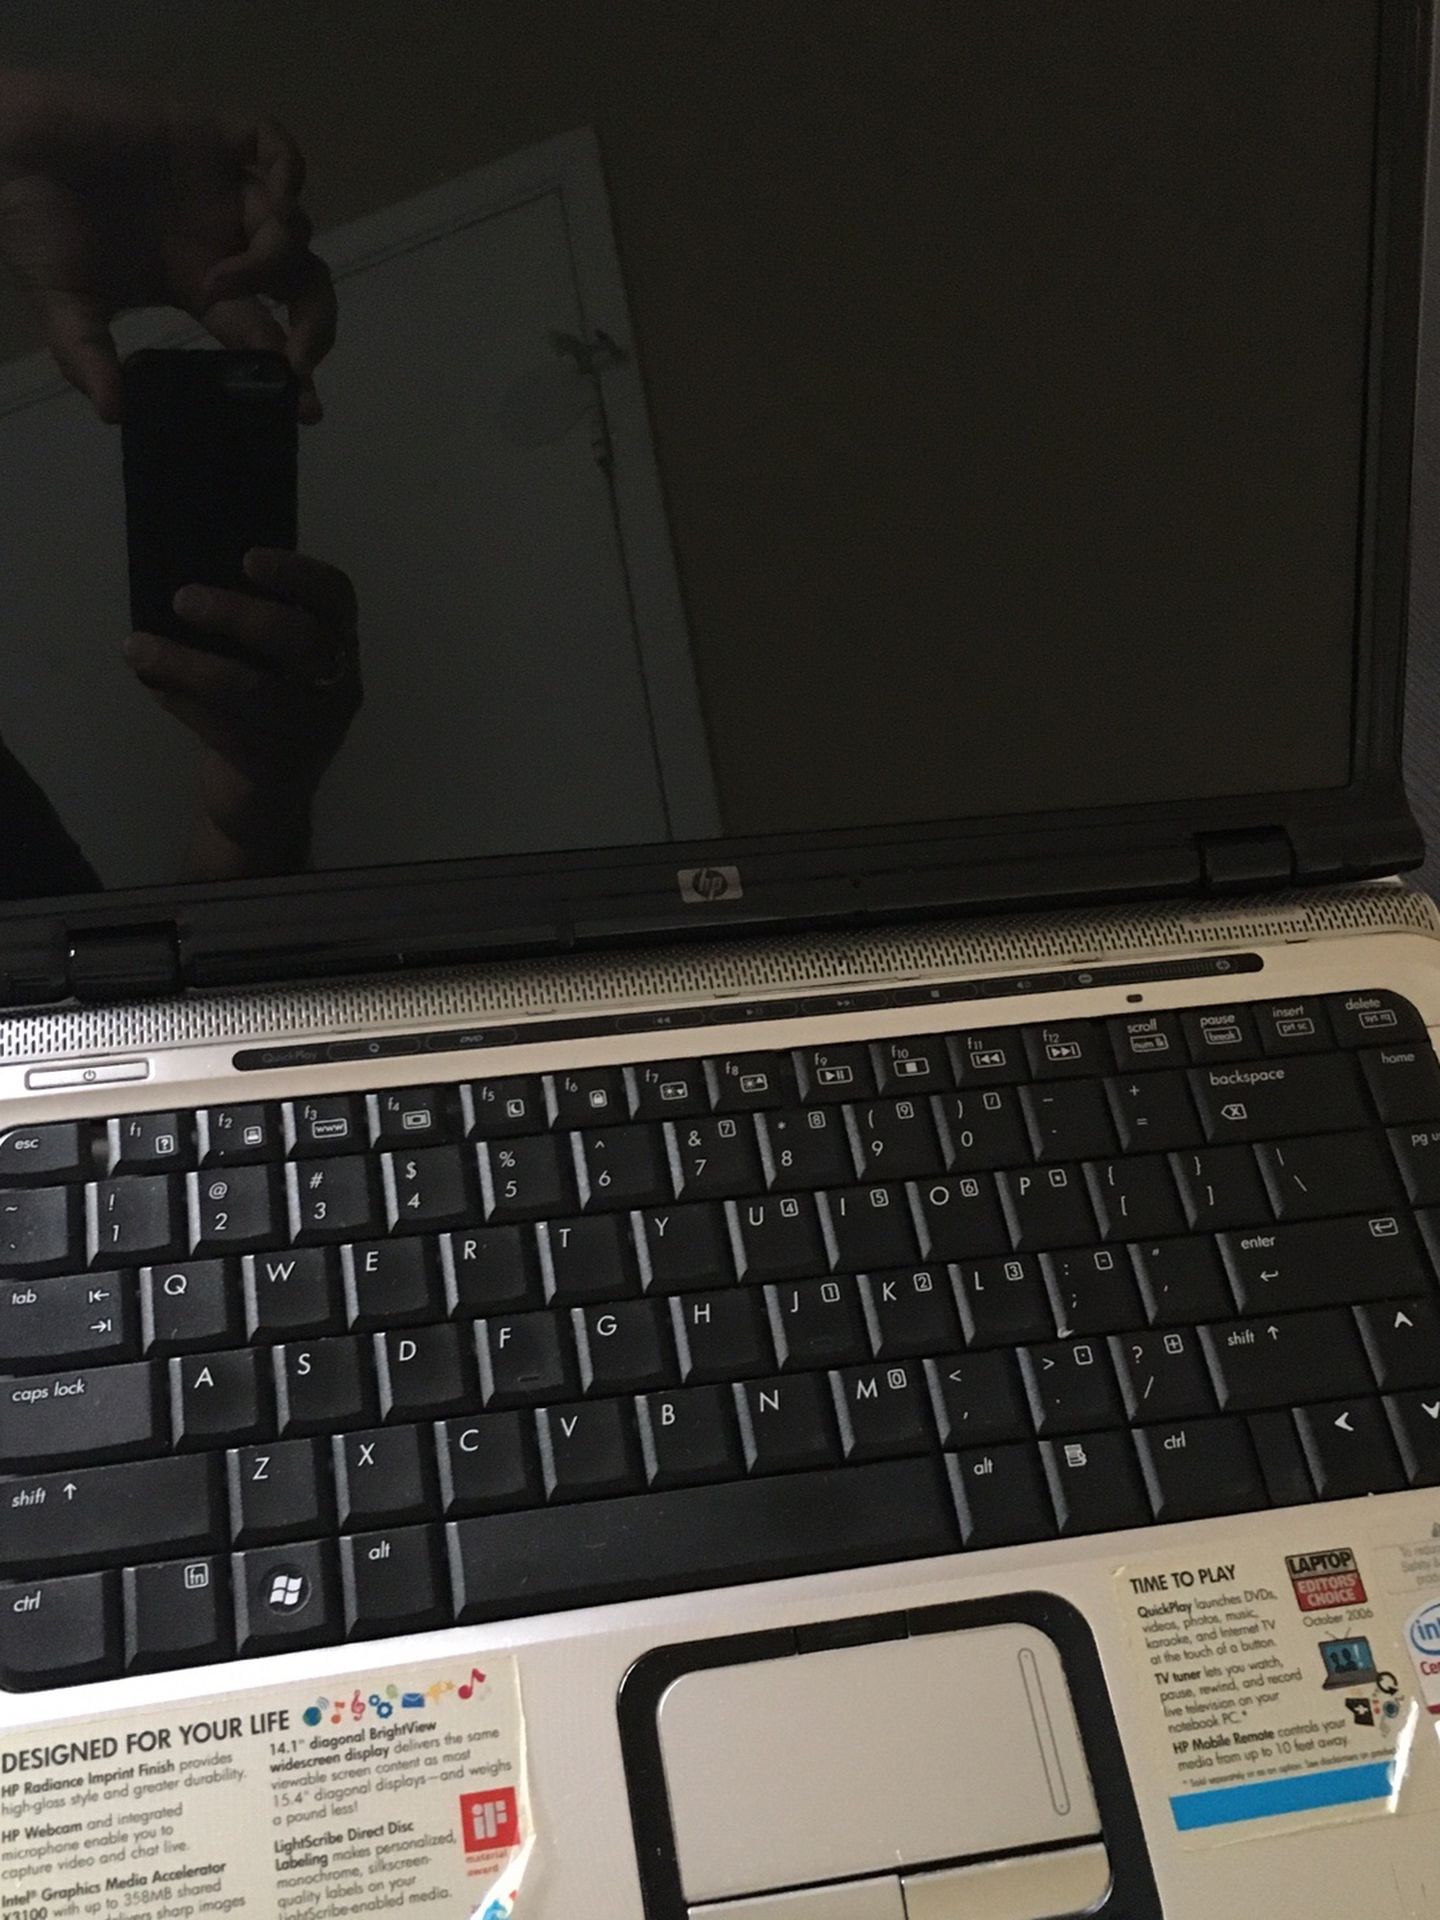 HP Pavilion (DV2910US) Laptop with Ubuntu (Linux) OS (For Parts)